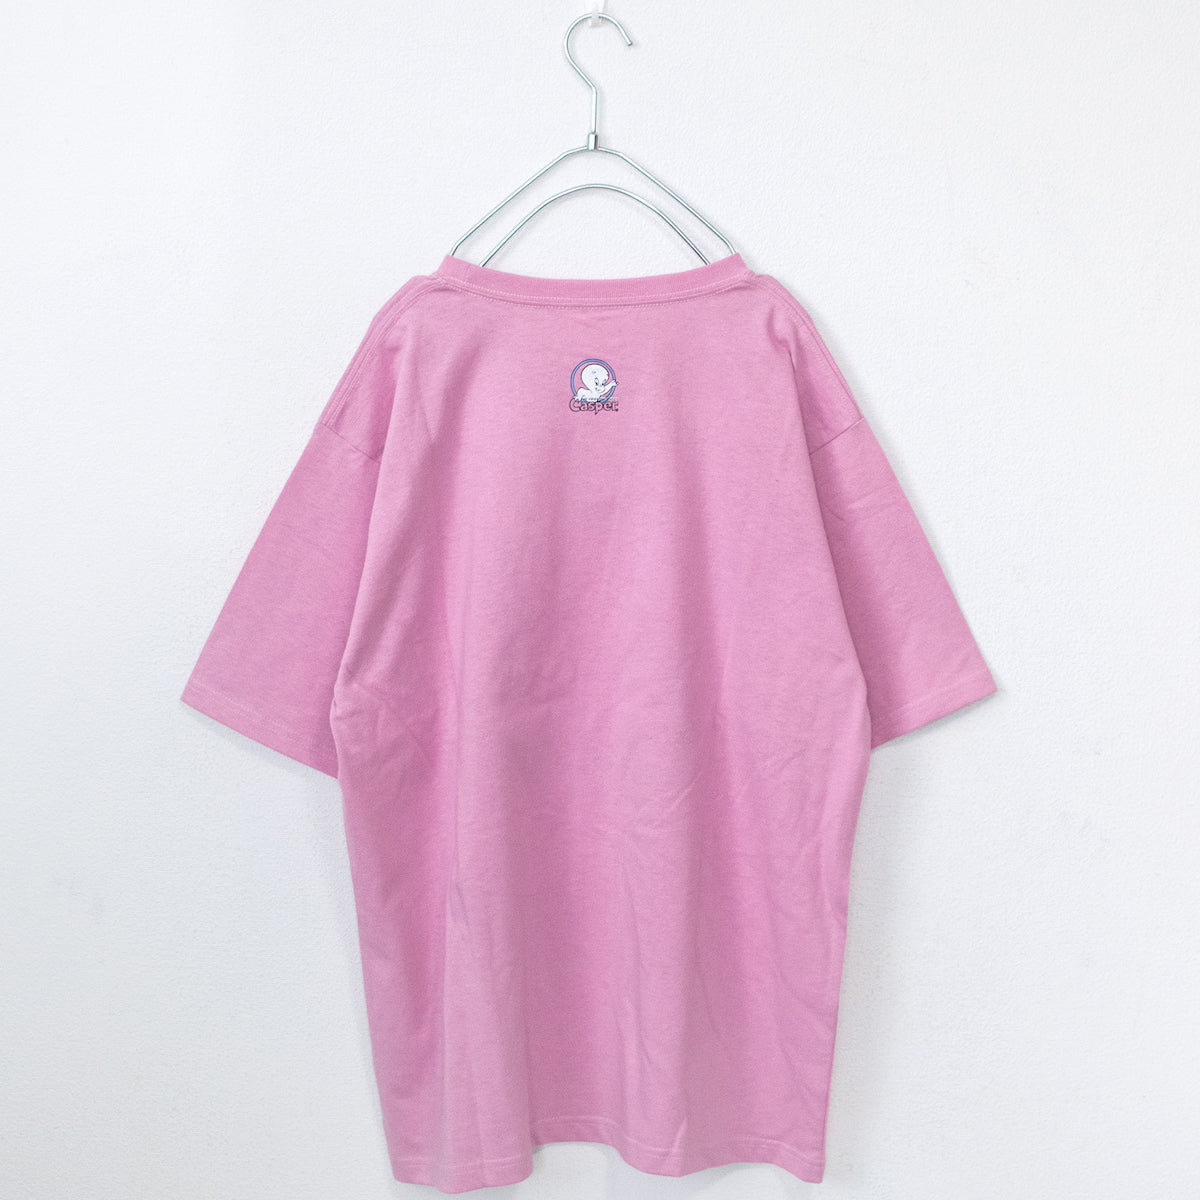 Casper キャスパー イラストプリント オーバーサイズ Tシャツ PINK